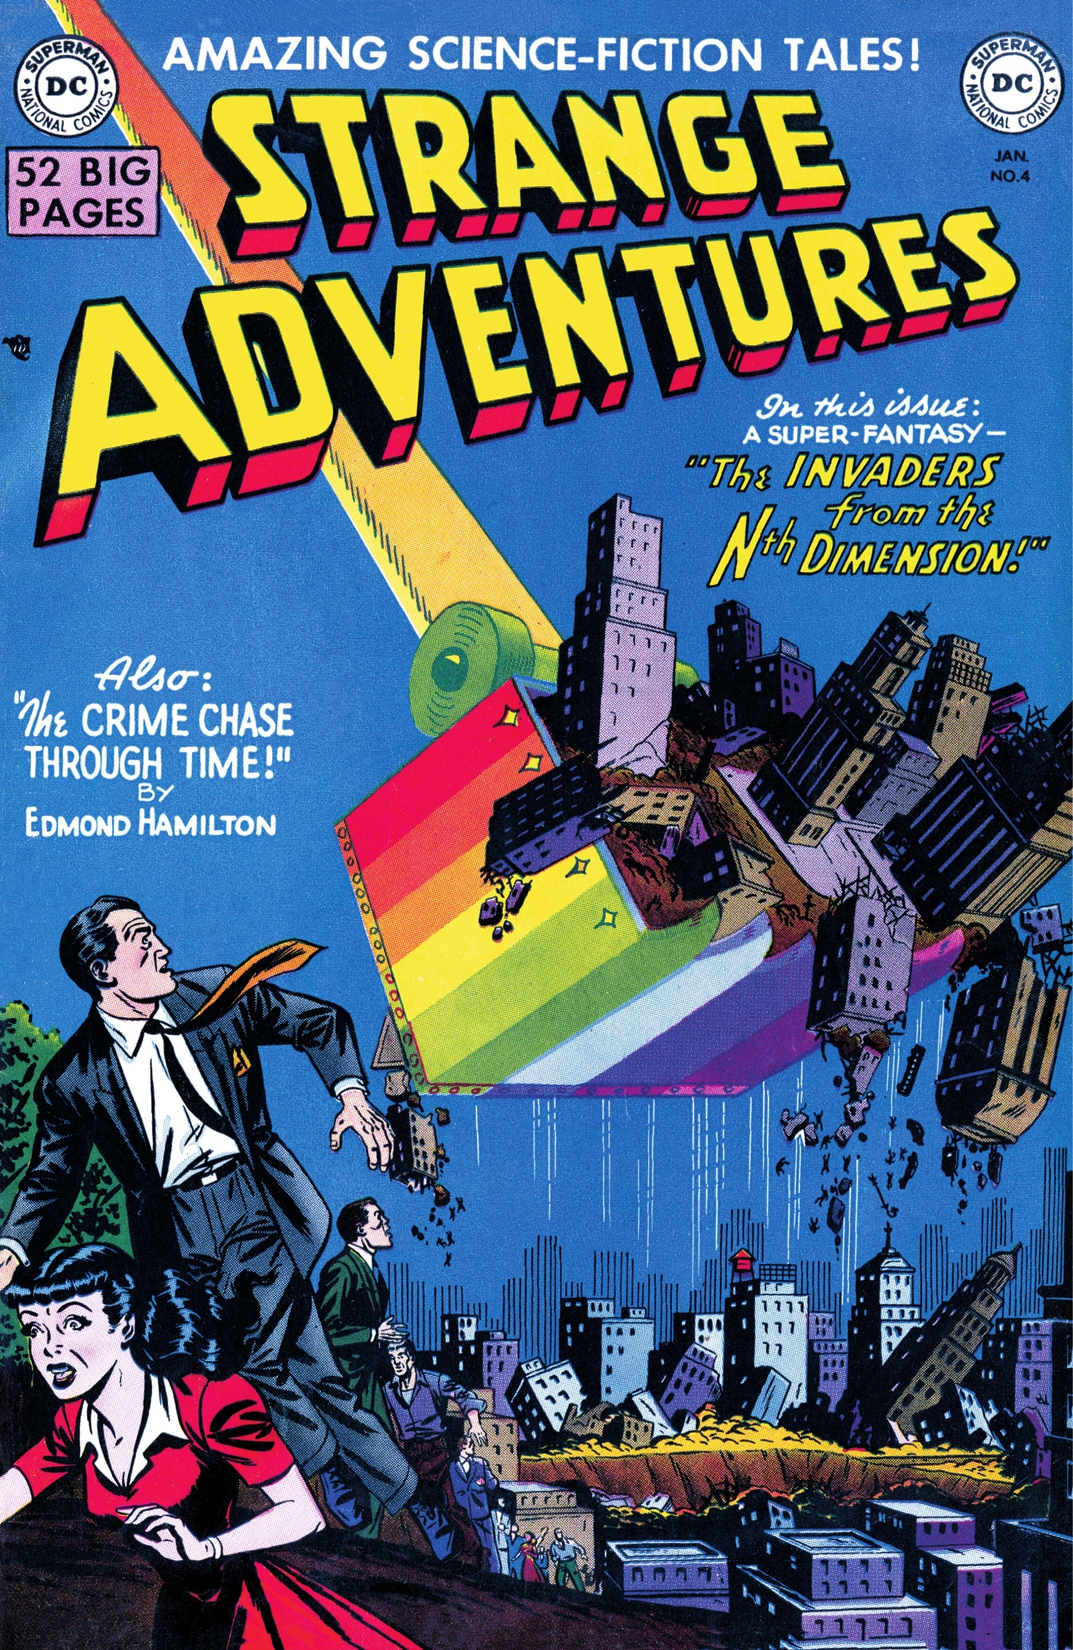 Strange Adventures (1950-1973) #4 preview images